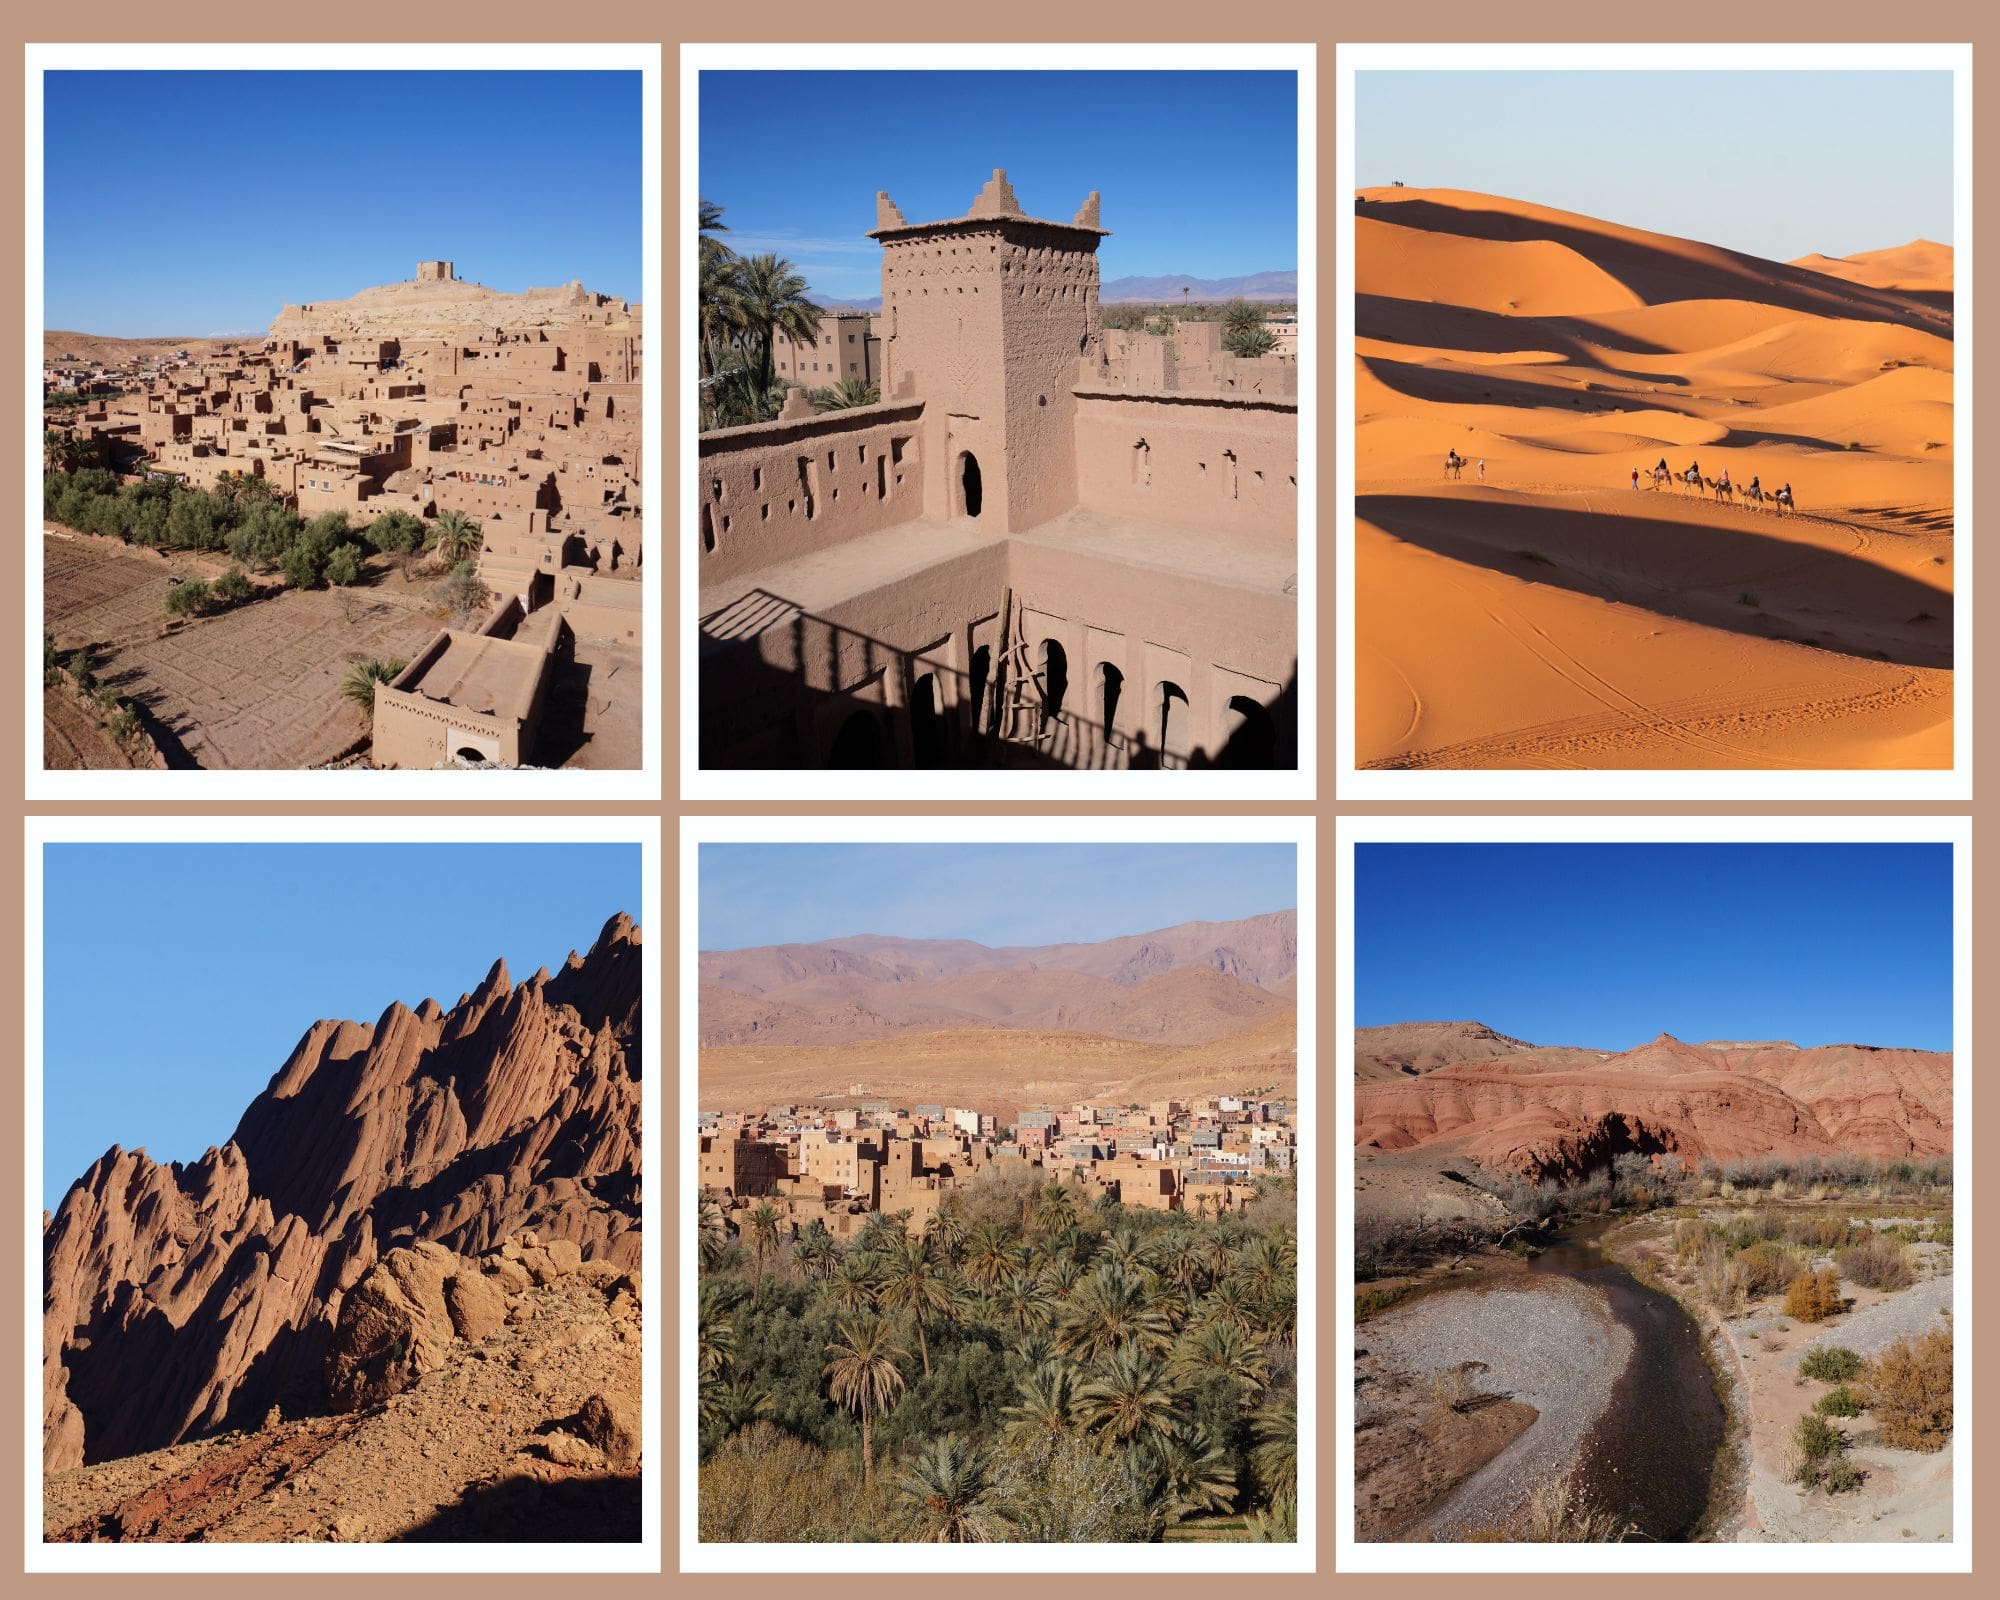 voyage au maroc